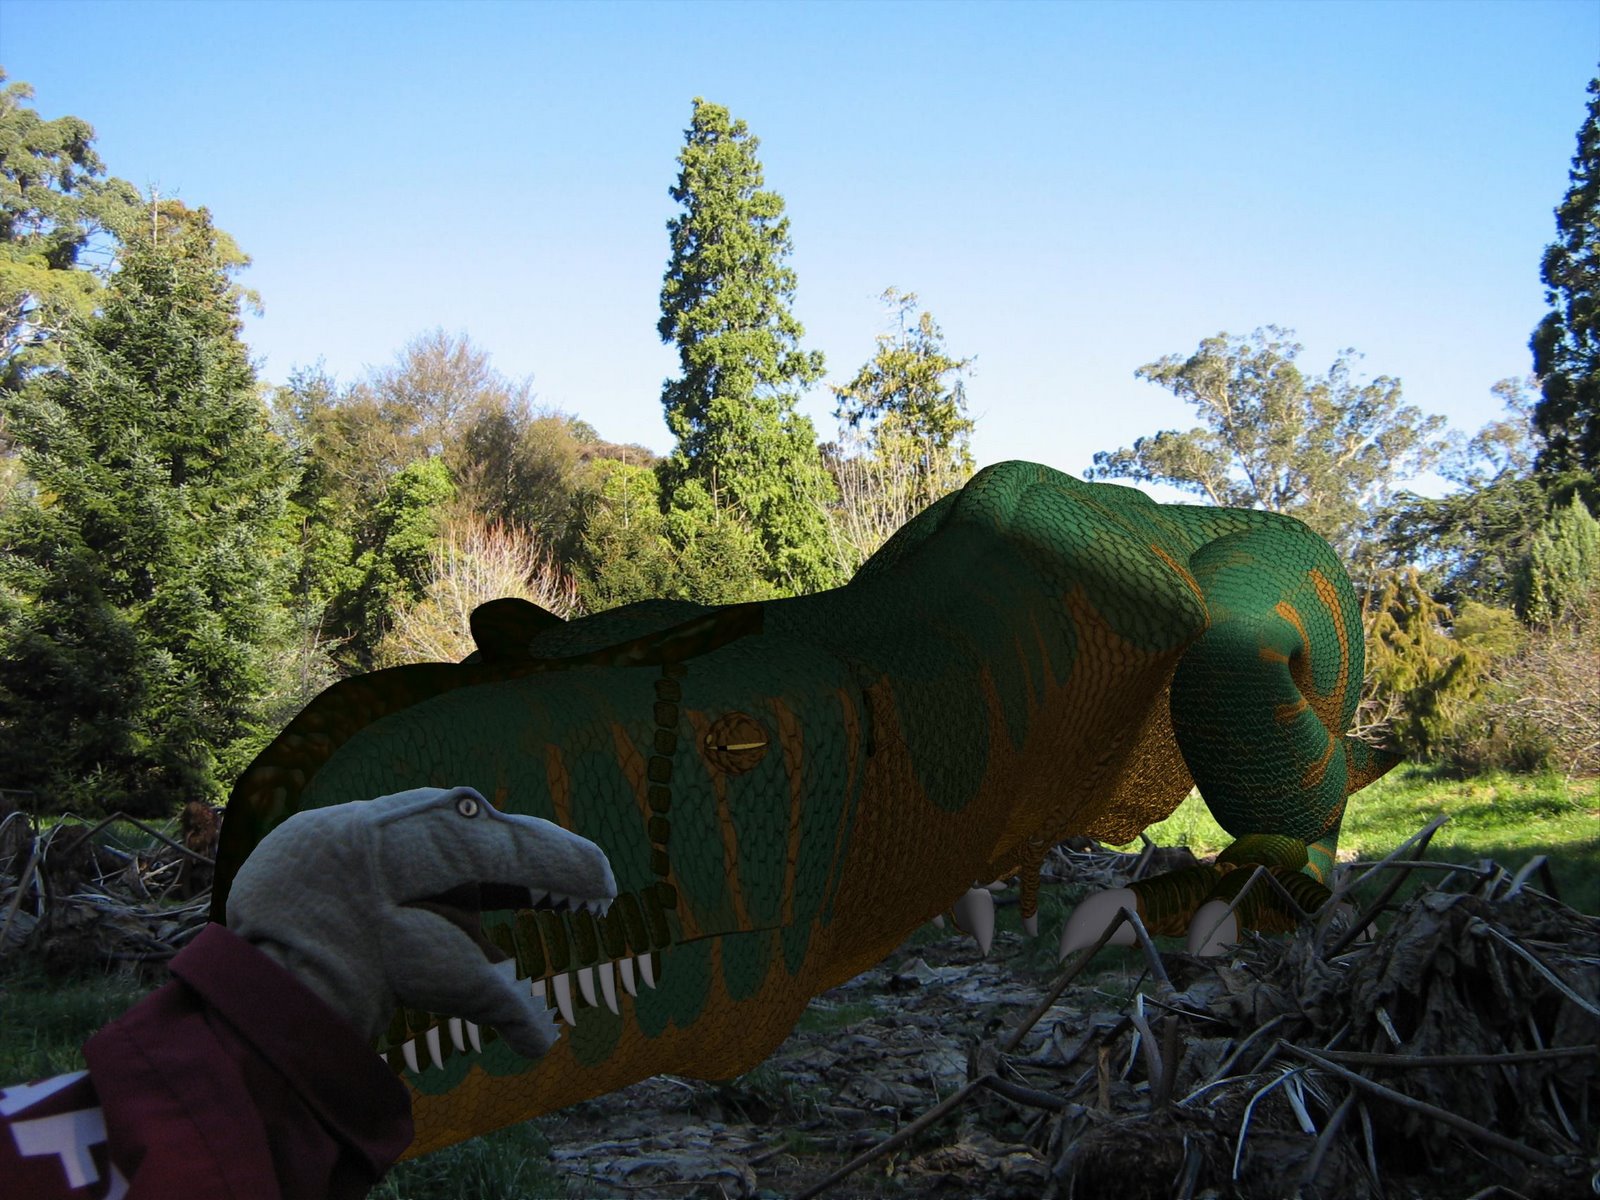 [Larry+Sleeping+Approach+Final+Tyrannosaur+Jurassic+Park+Dinosaur+Fossil+t+rex.jpg]